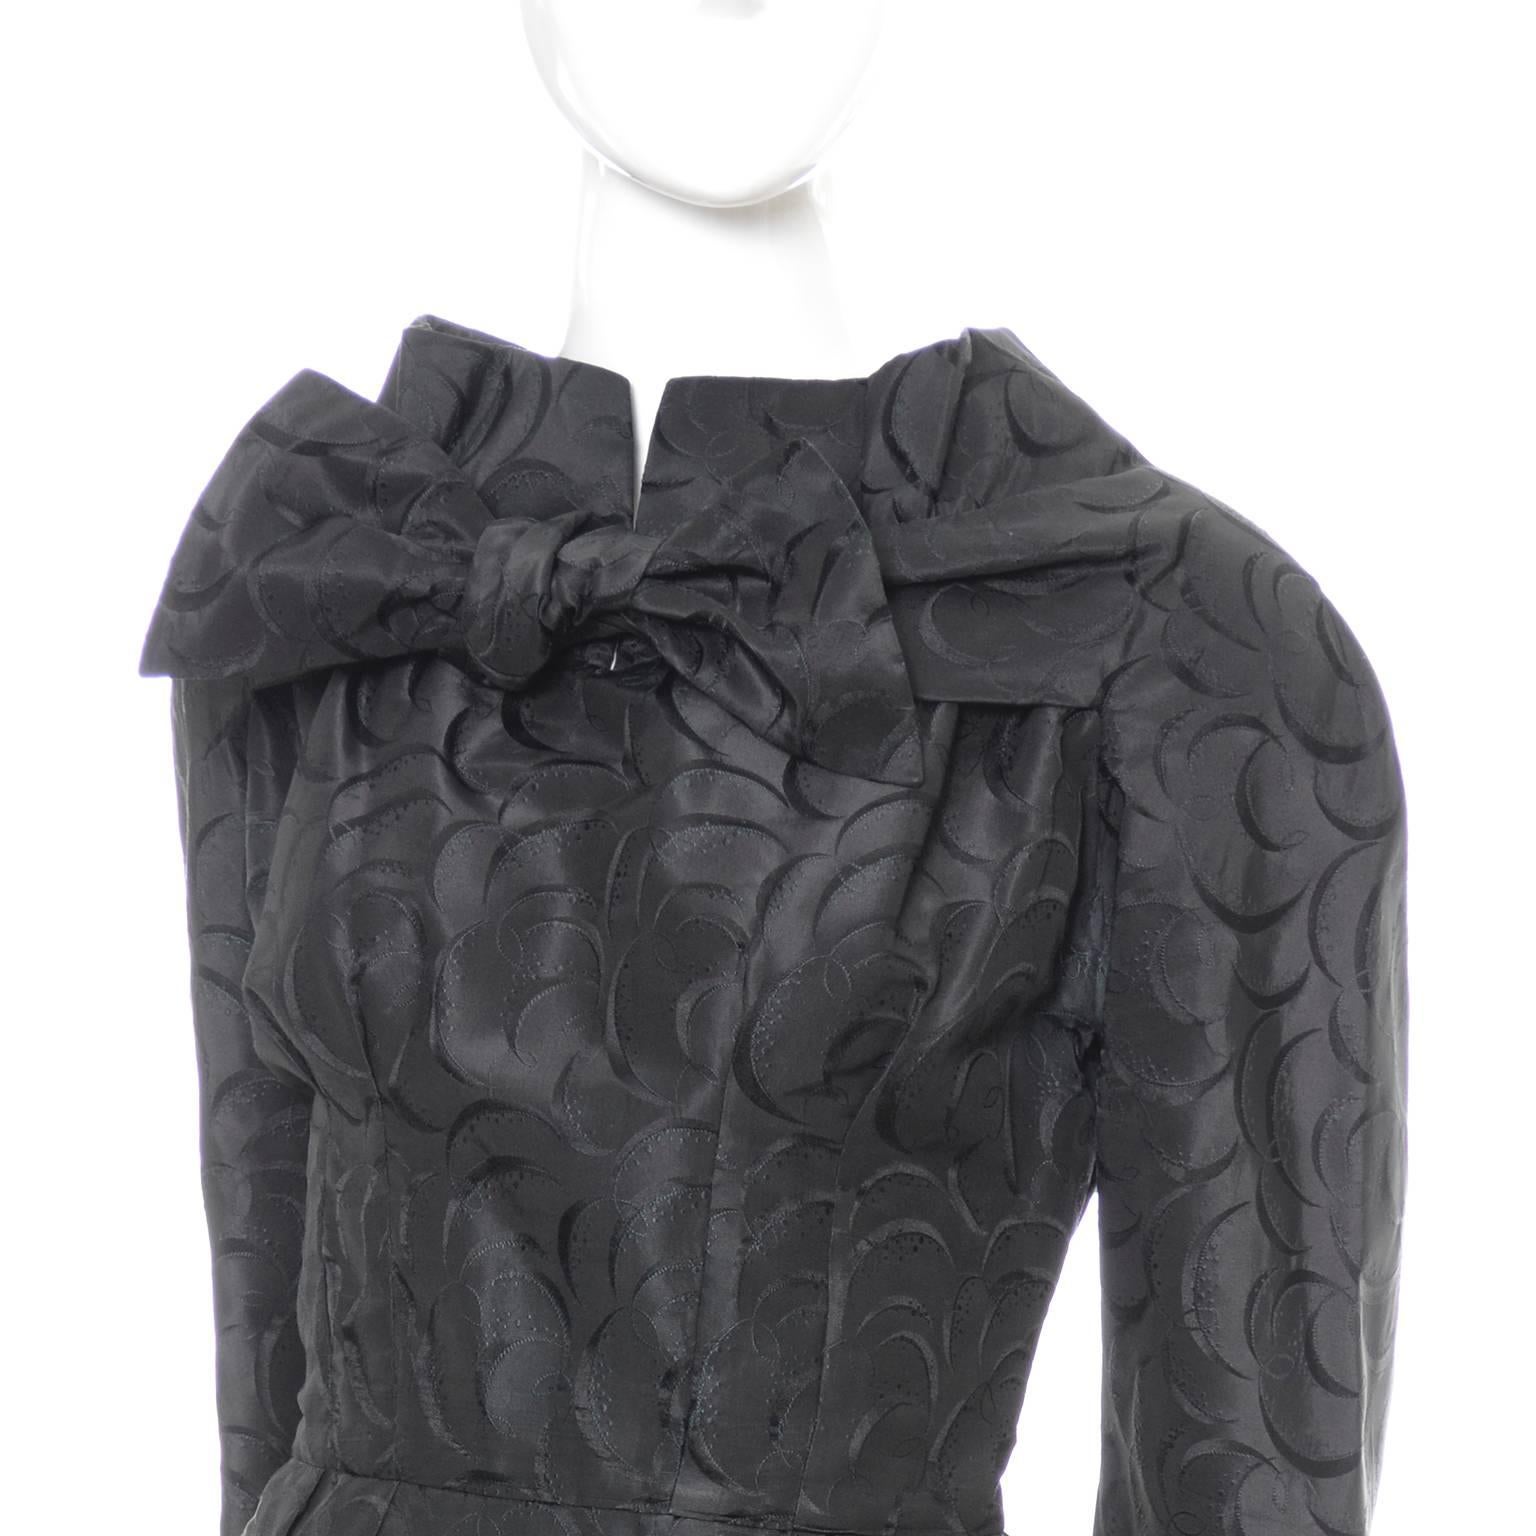 Women's Werle Beverly Hills 1950's Vintage Dress Saks Fifth Avenue Black Patterned Satin